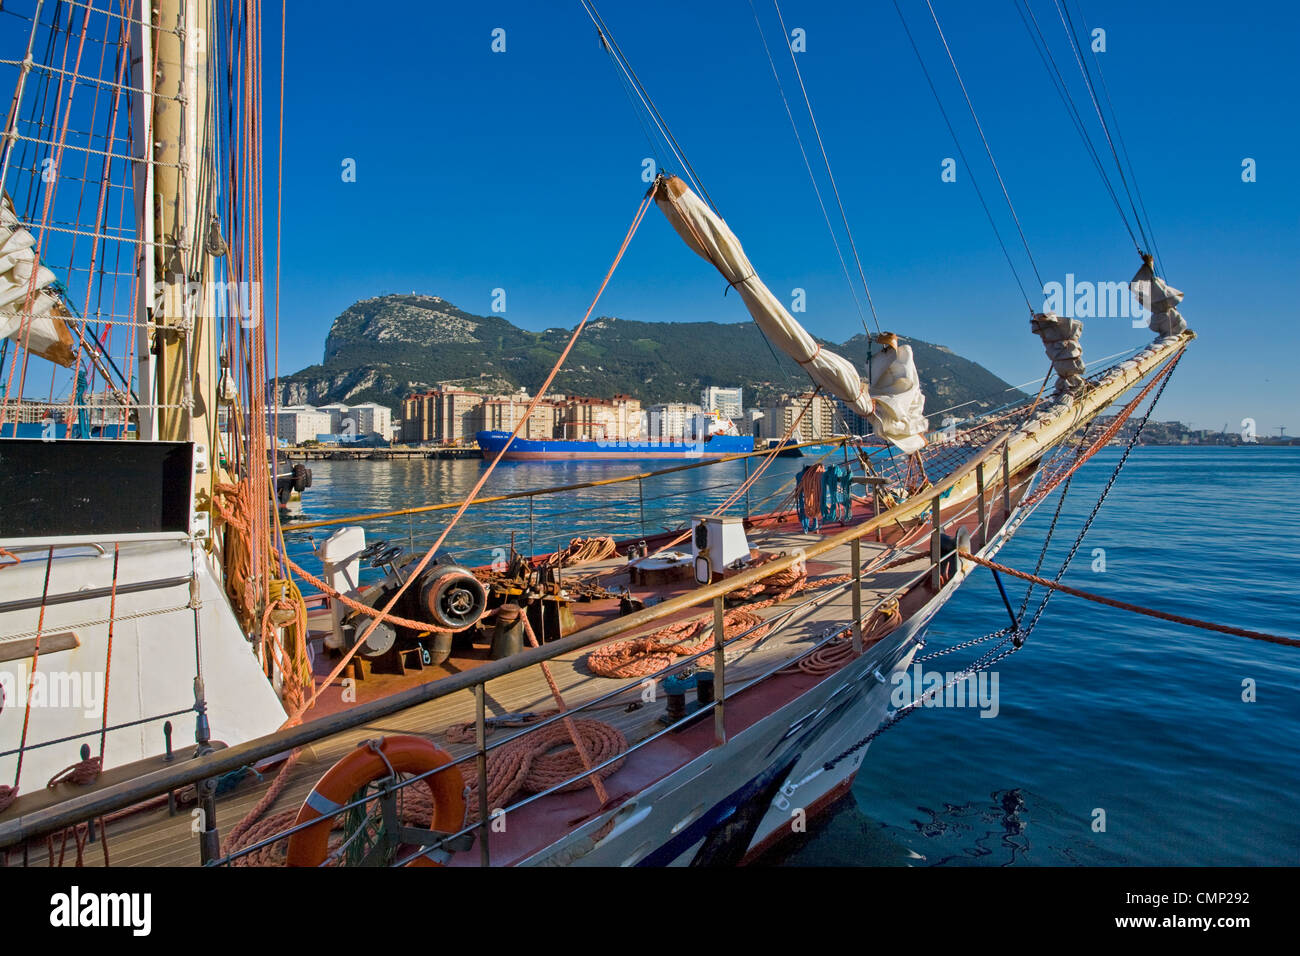 Traditional sail boat in Gbraltar harbor, Rock of Gibraltar Stock Photo